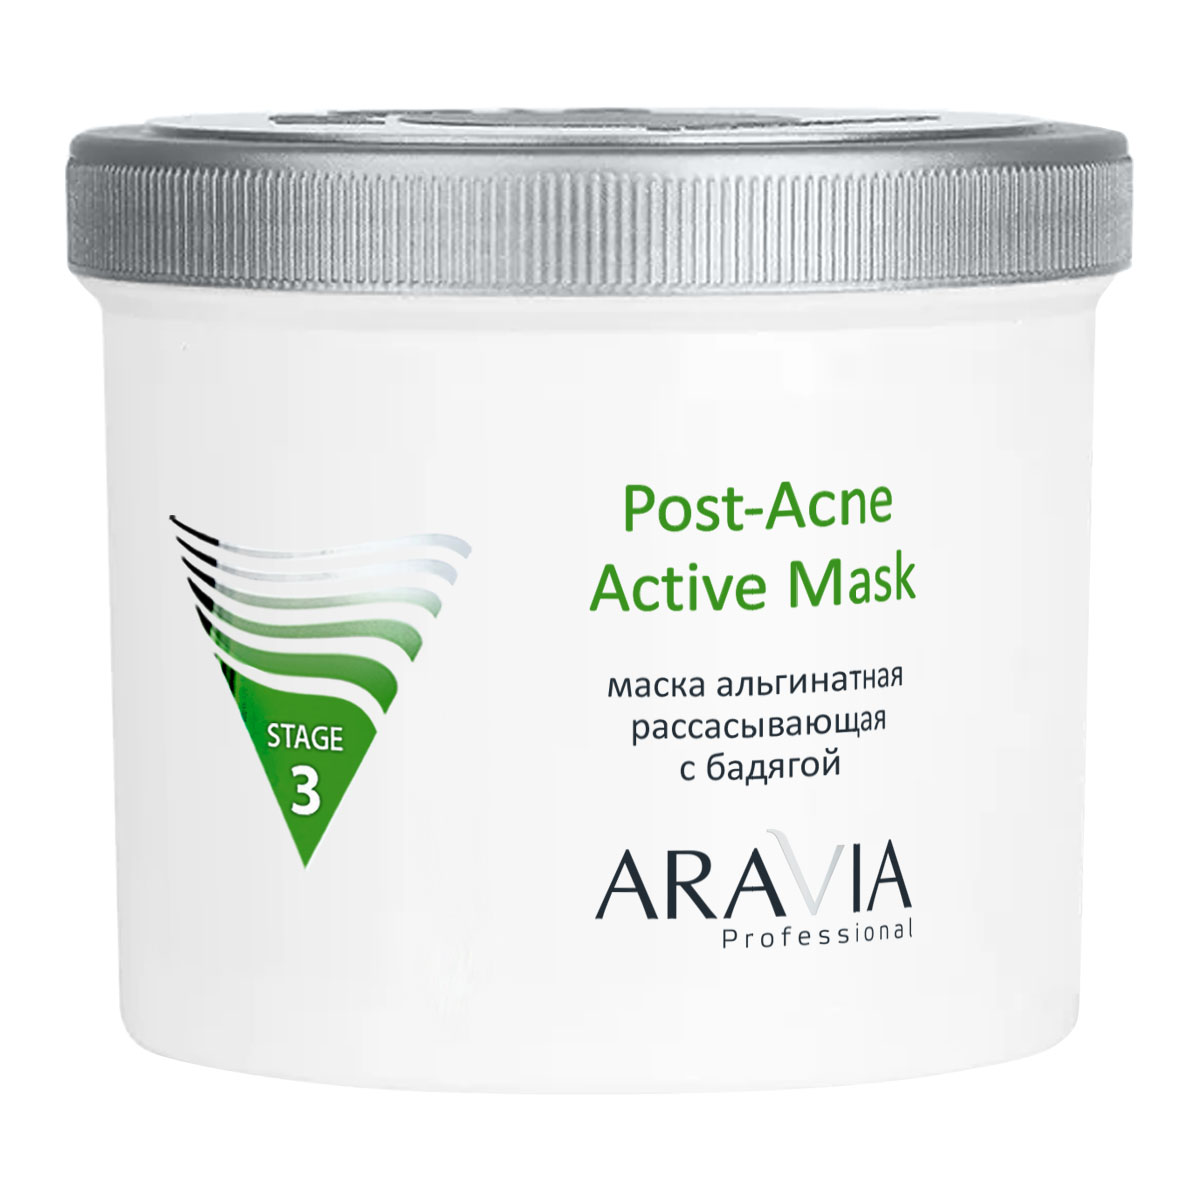 Aravia Professional Альгинатная рассасывающая маска с бадягой Post-Acne Active Mask, 550 мл (Aravia Professional, Уход за лицом)